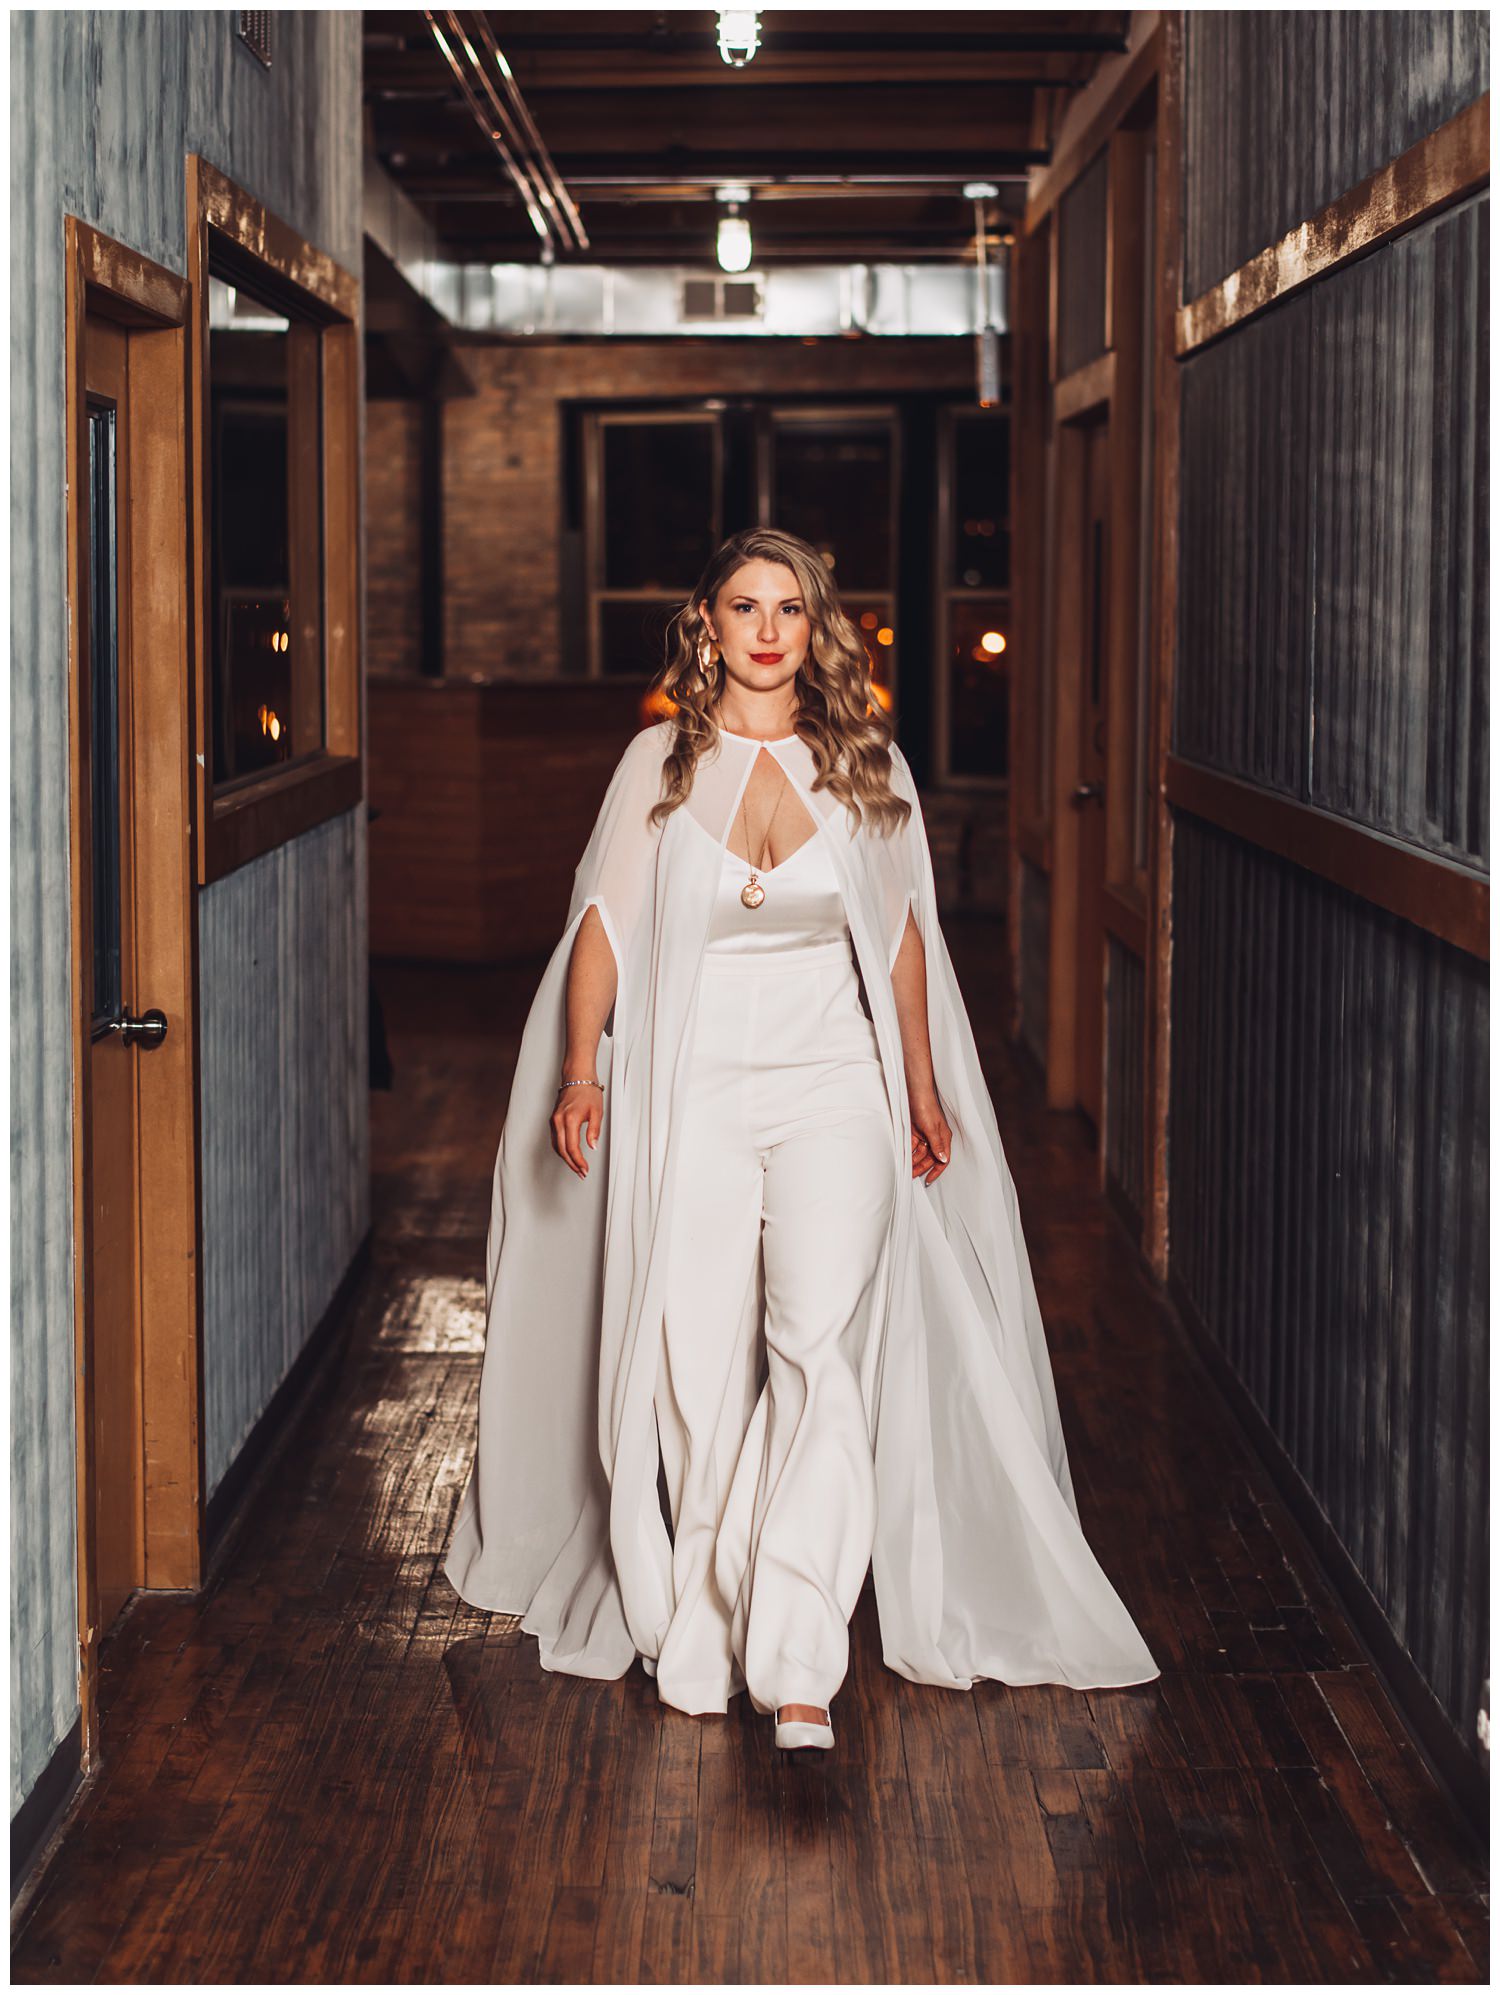 Lacuna Lofts Chicago Wedding Photography - The Adamkovi, bride with a cape photos